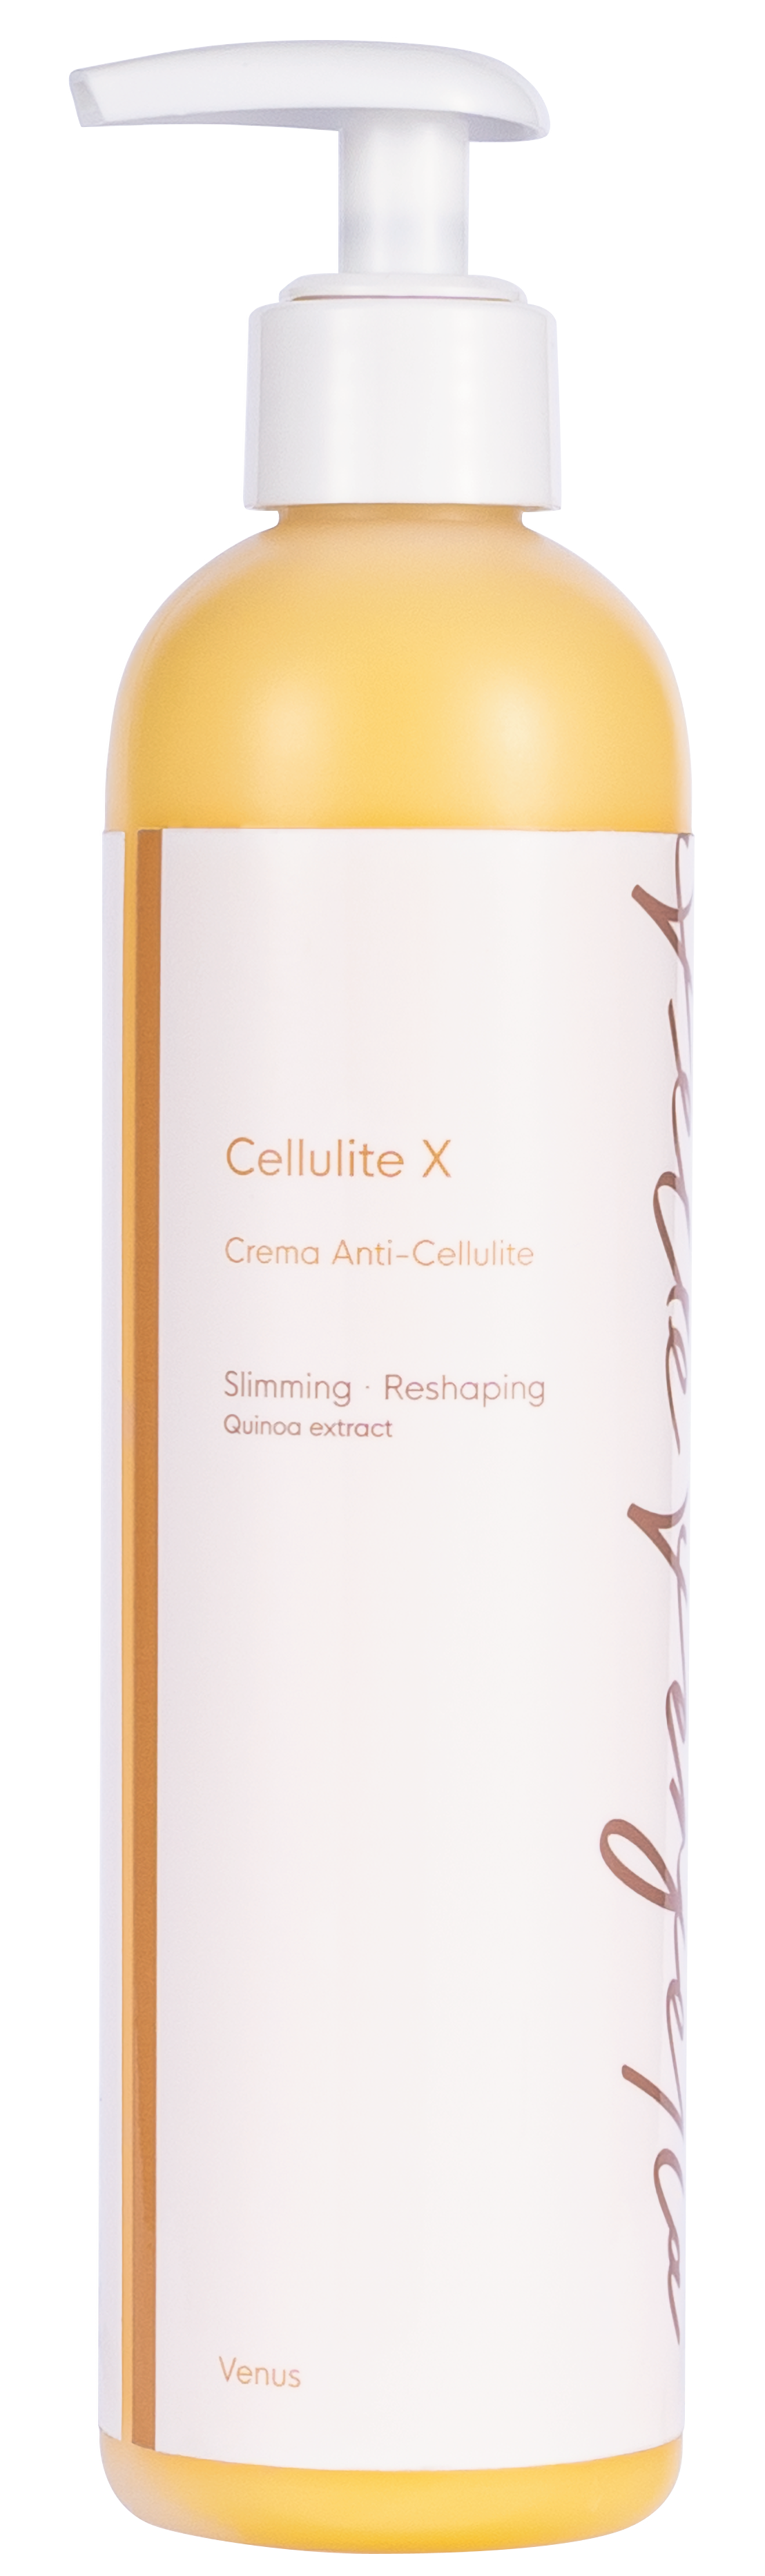 Cellulite X CX緊緻纖型霜